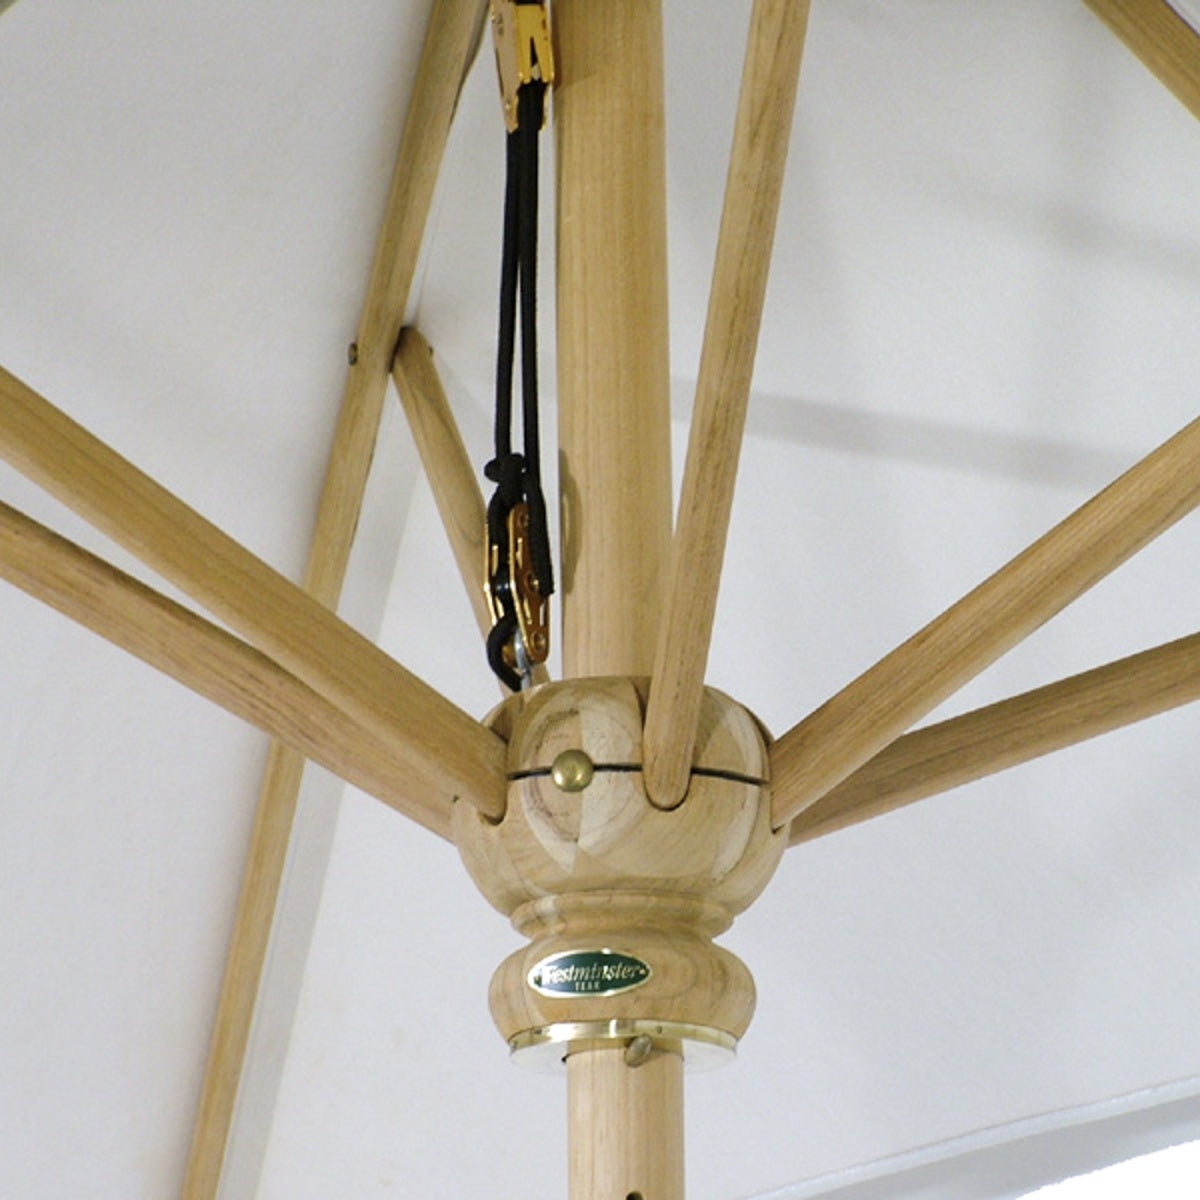 Westminster Teak - 6.5 ft x 10 ft Grand Umbrella  Rectangular - All Teak Construction - 17640F